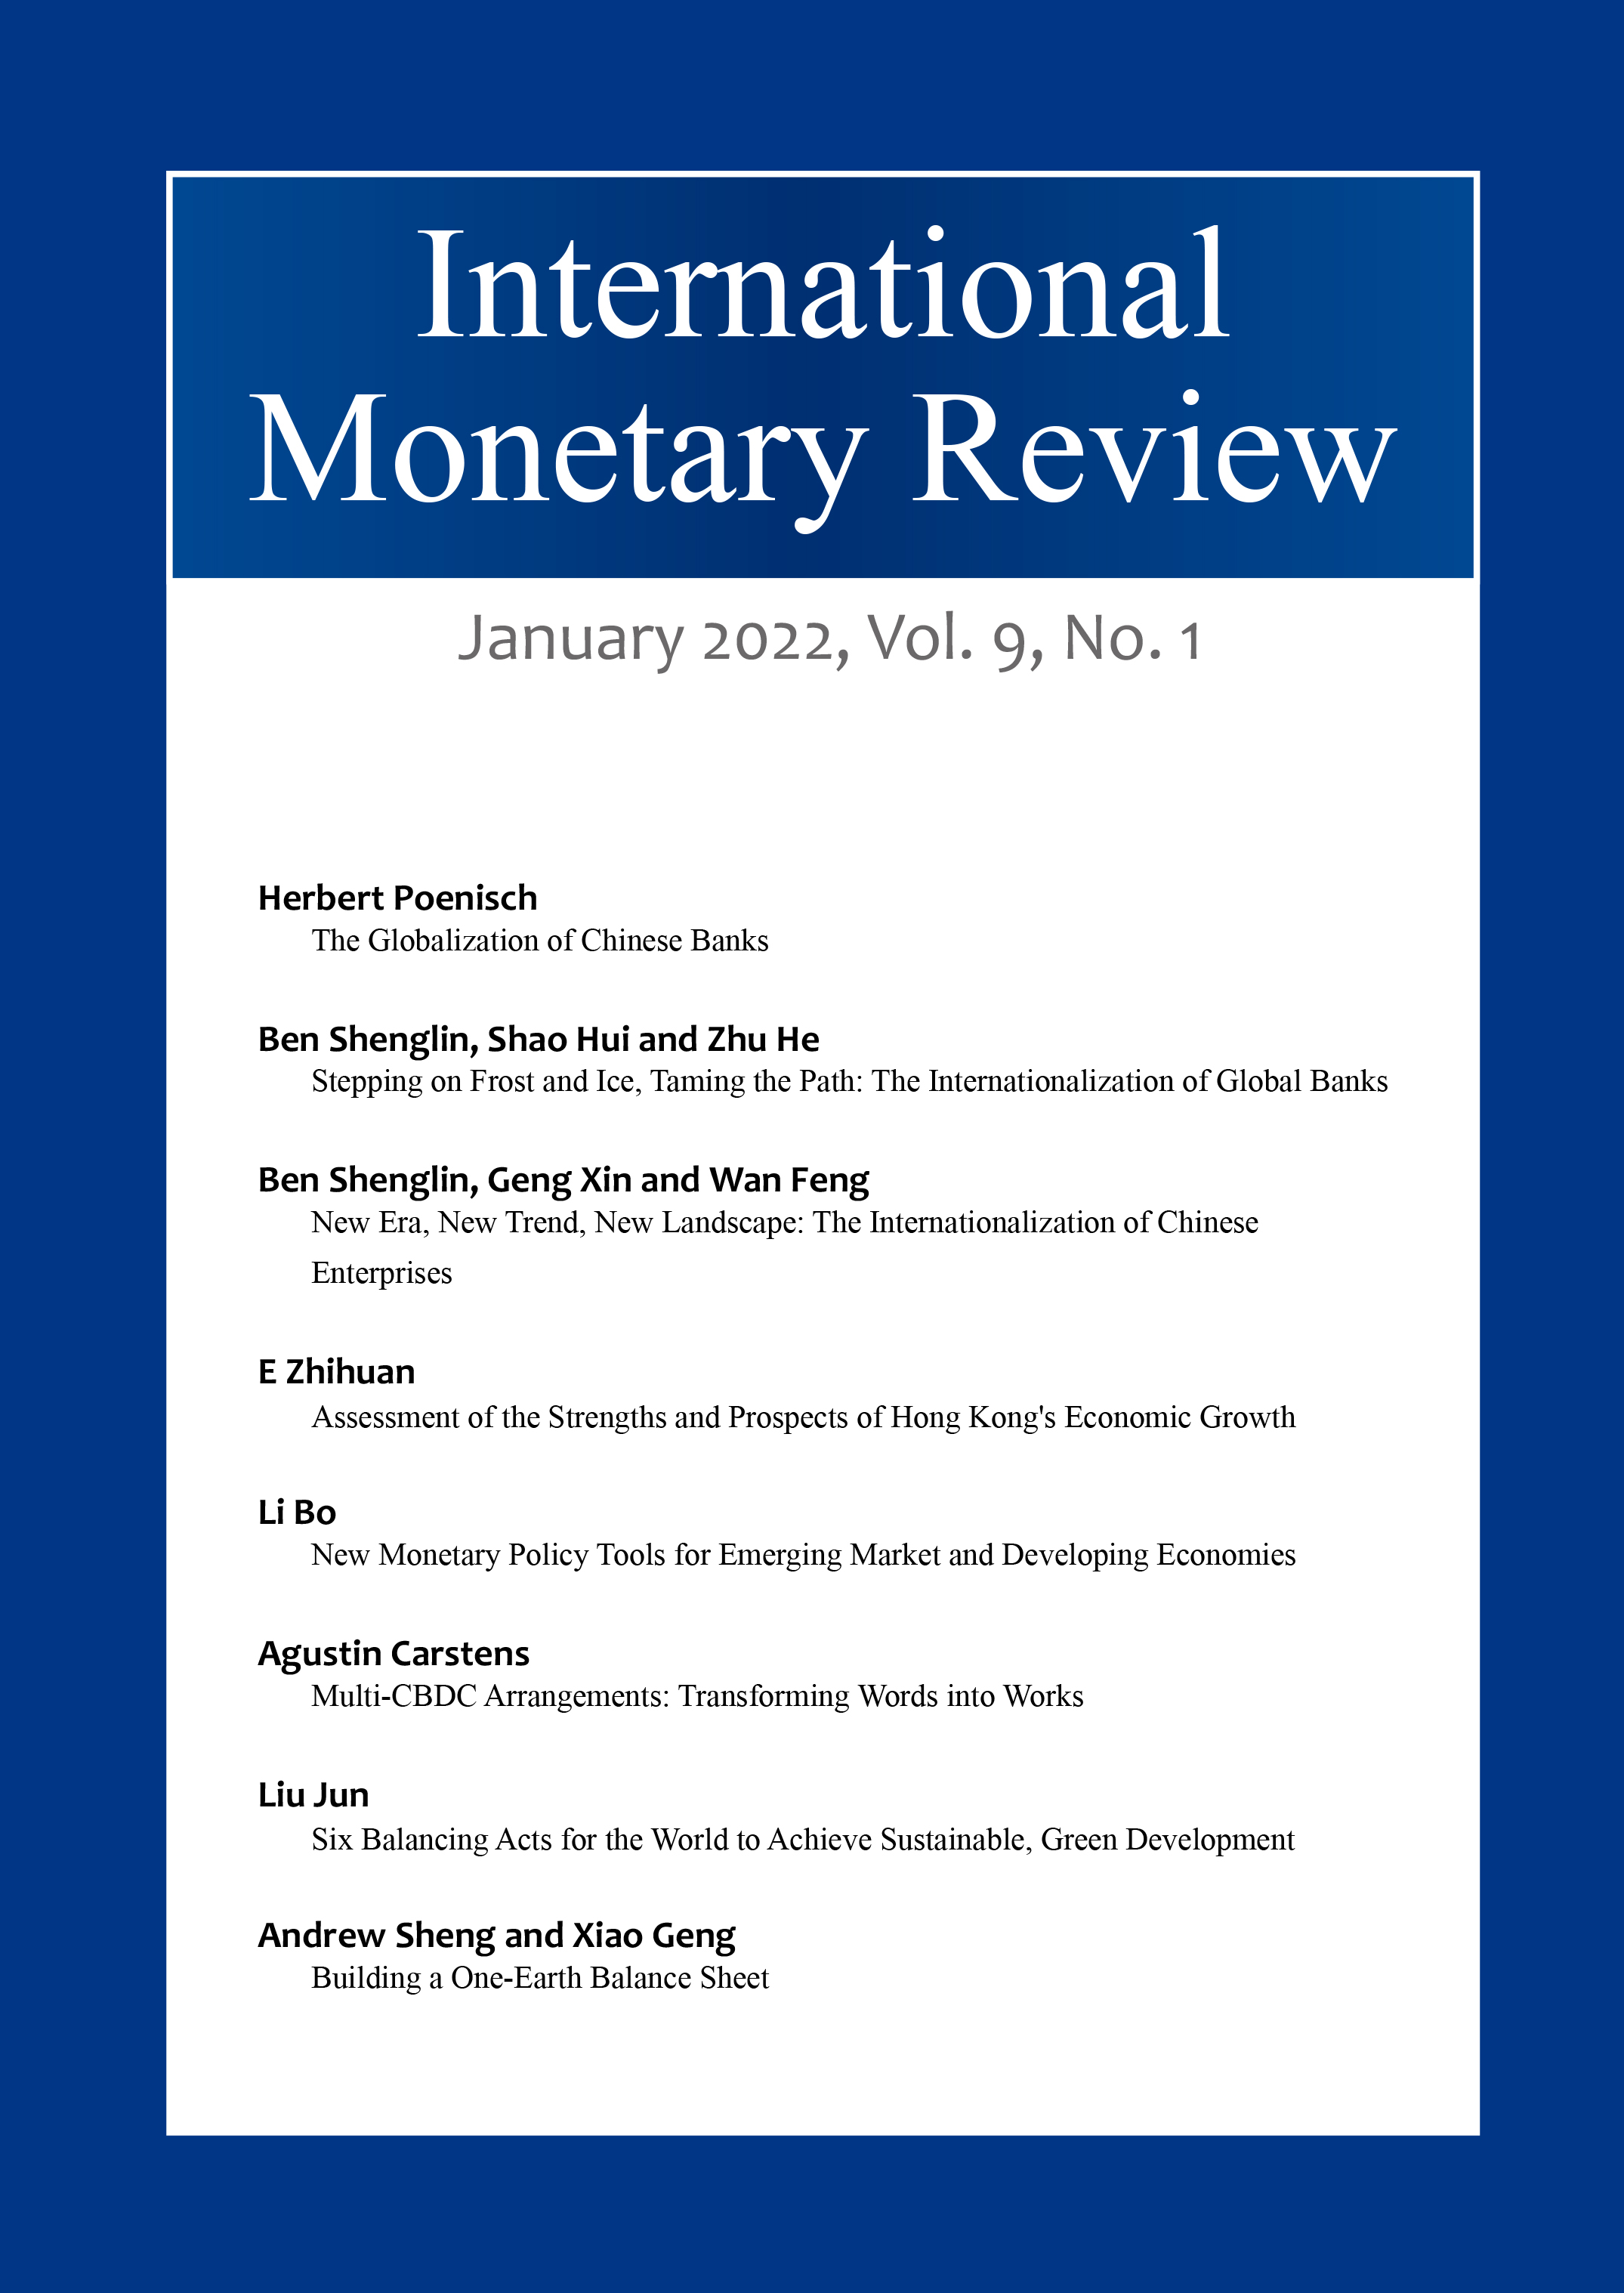 International Monetary Review, January 2022, Vol. 9 No. 1